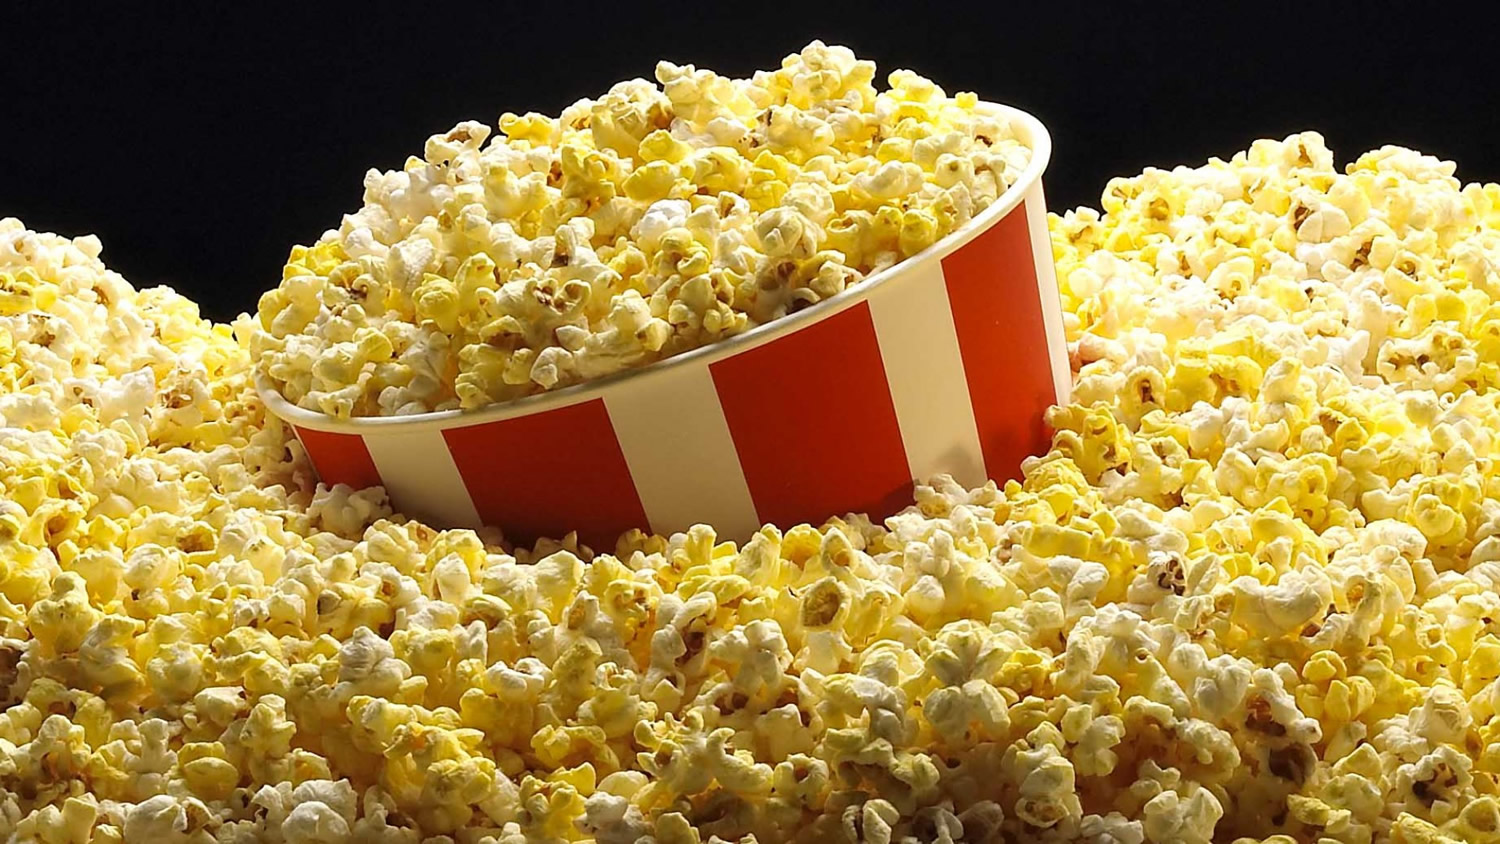 Popcorn - Popcorn Nutrition Facts, Calories - Popcorn Diet